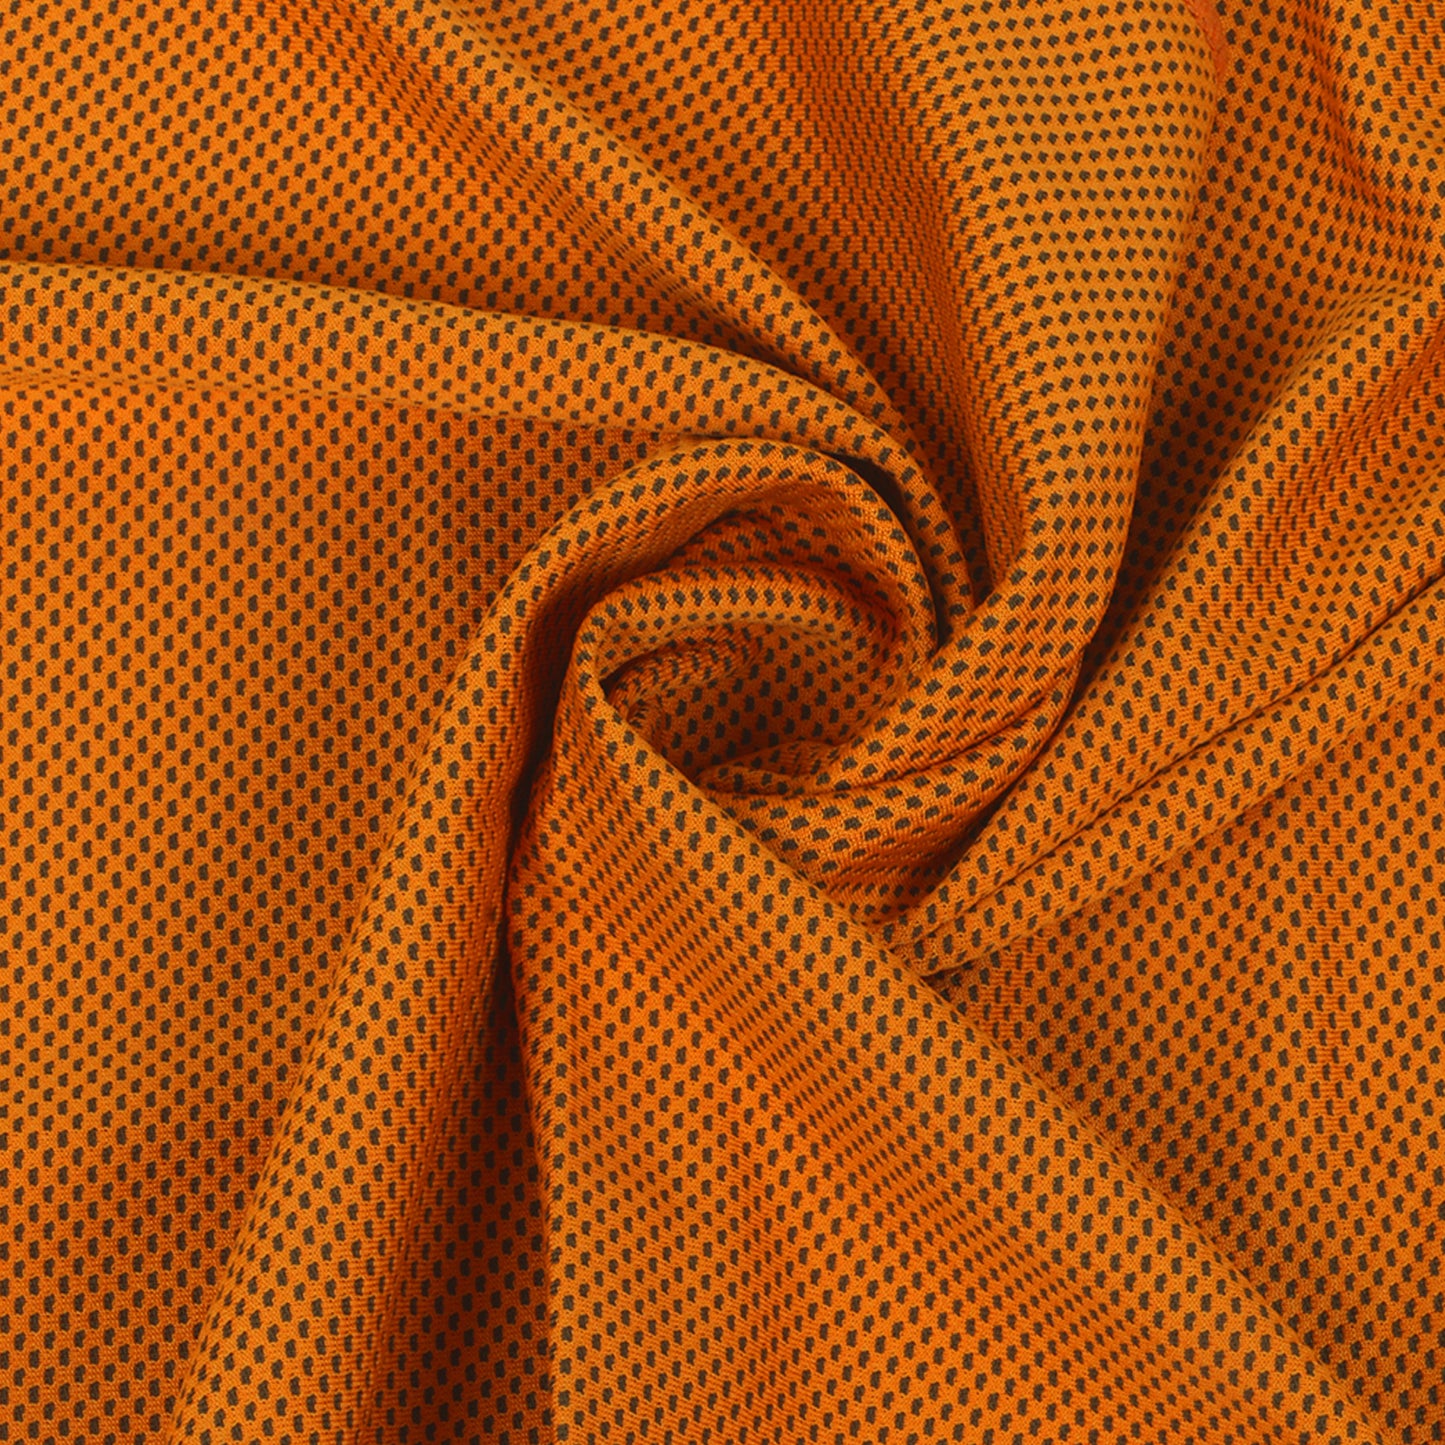 Cooling Towel - Orange